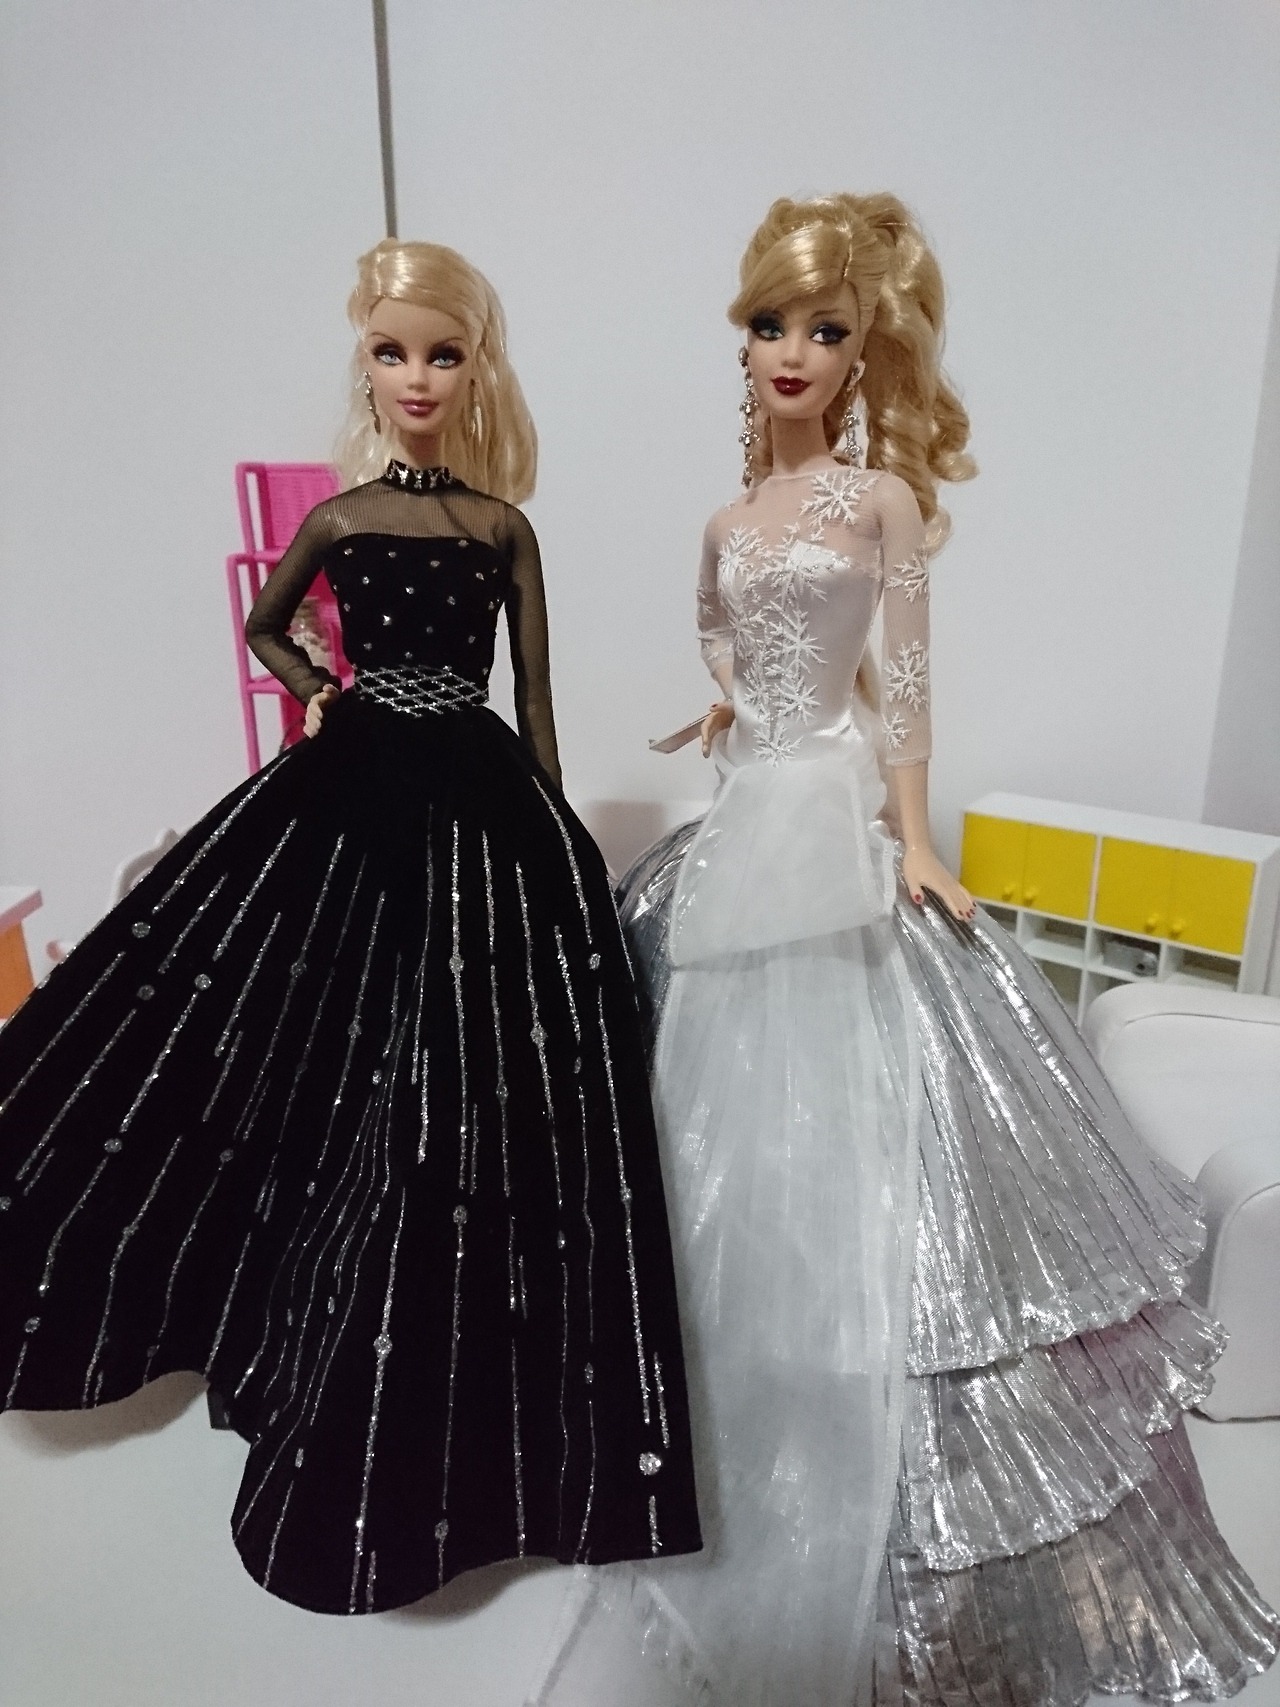 2008 holiday barbie